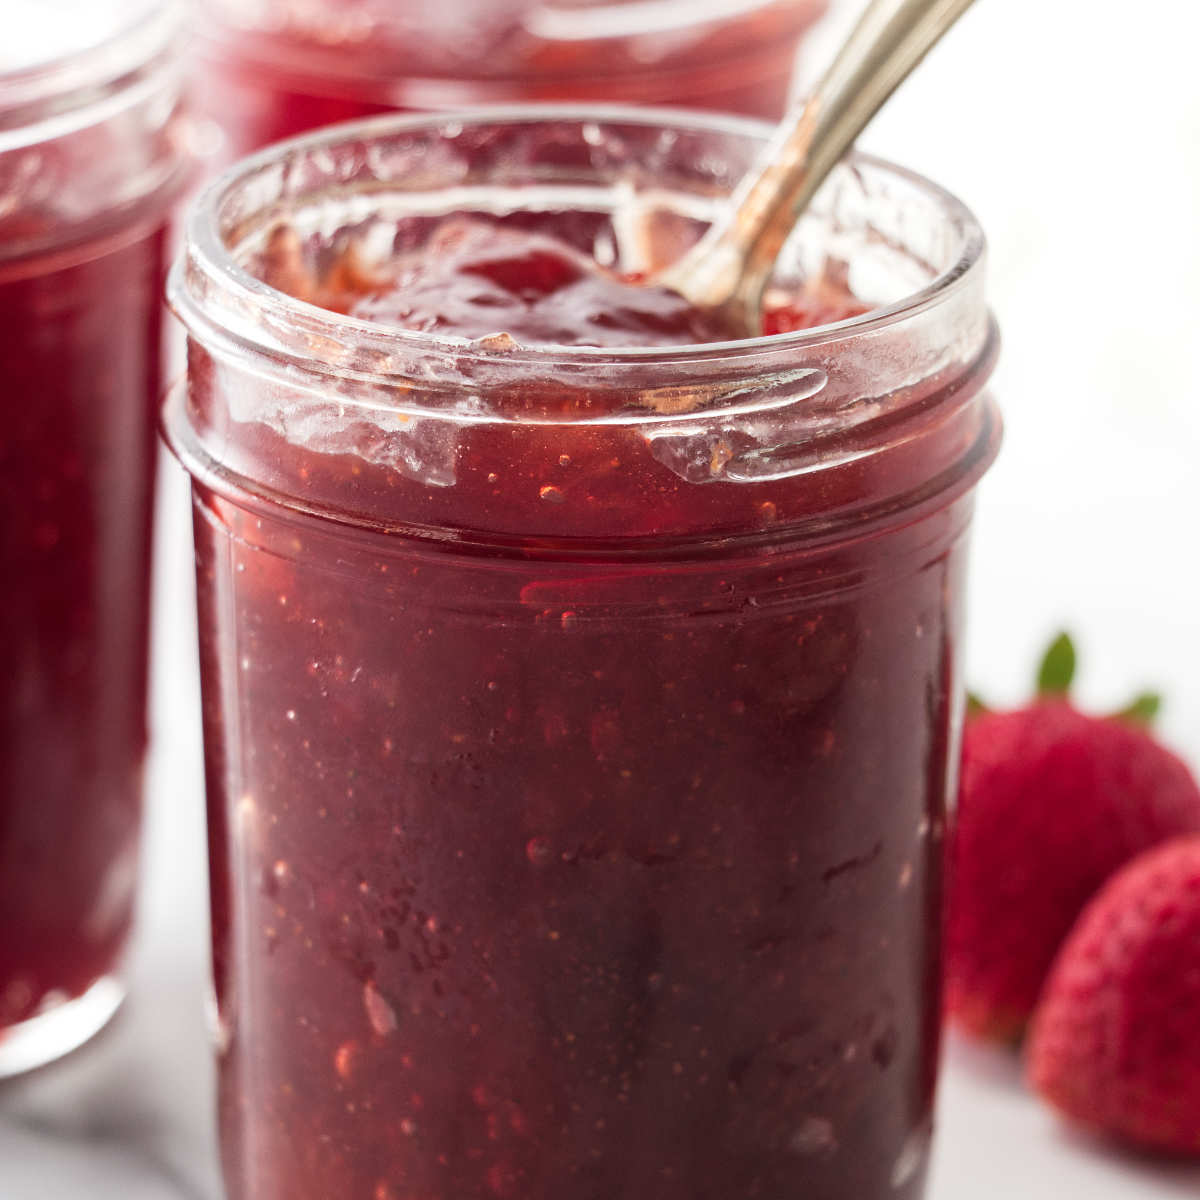 Homemade strawberry jam in a mason jar.